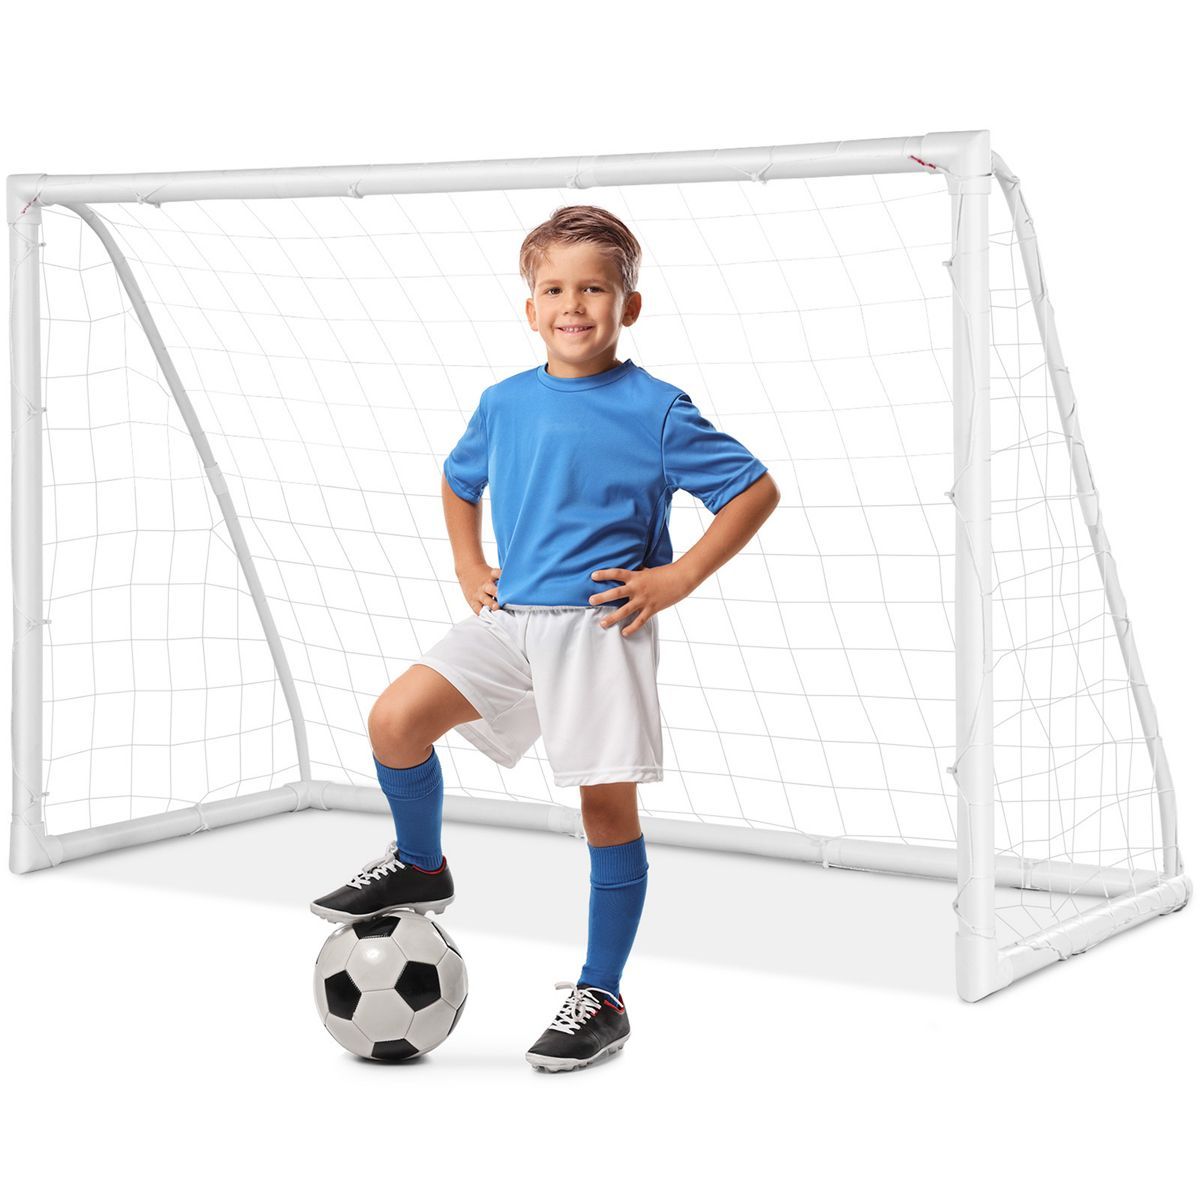 Costway 6 FT  x 4 FT Portable Kids Soccer Goal Quick Set-up for Backyard Soccer Training | Target